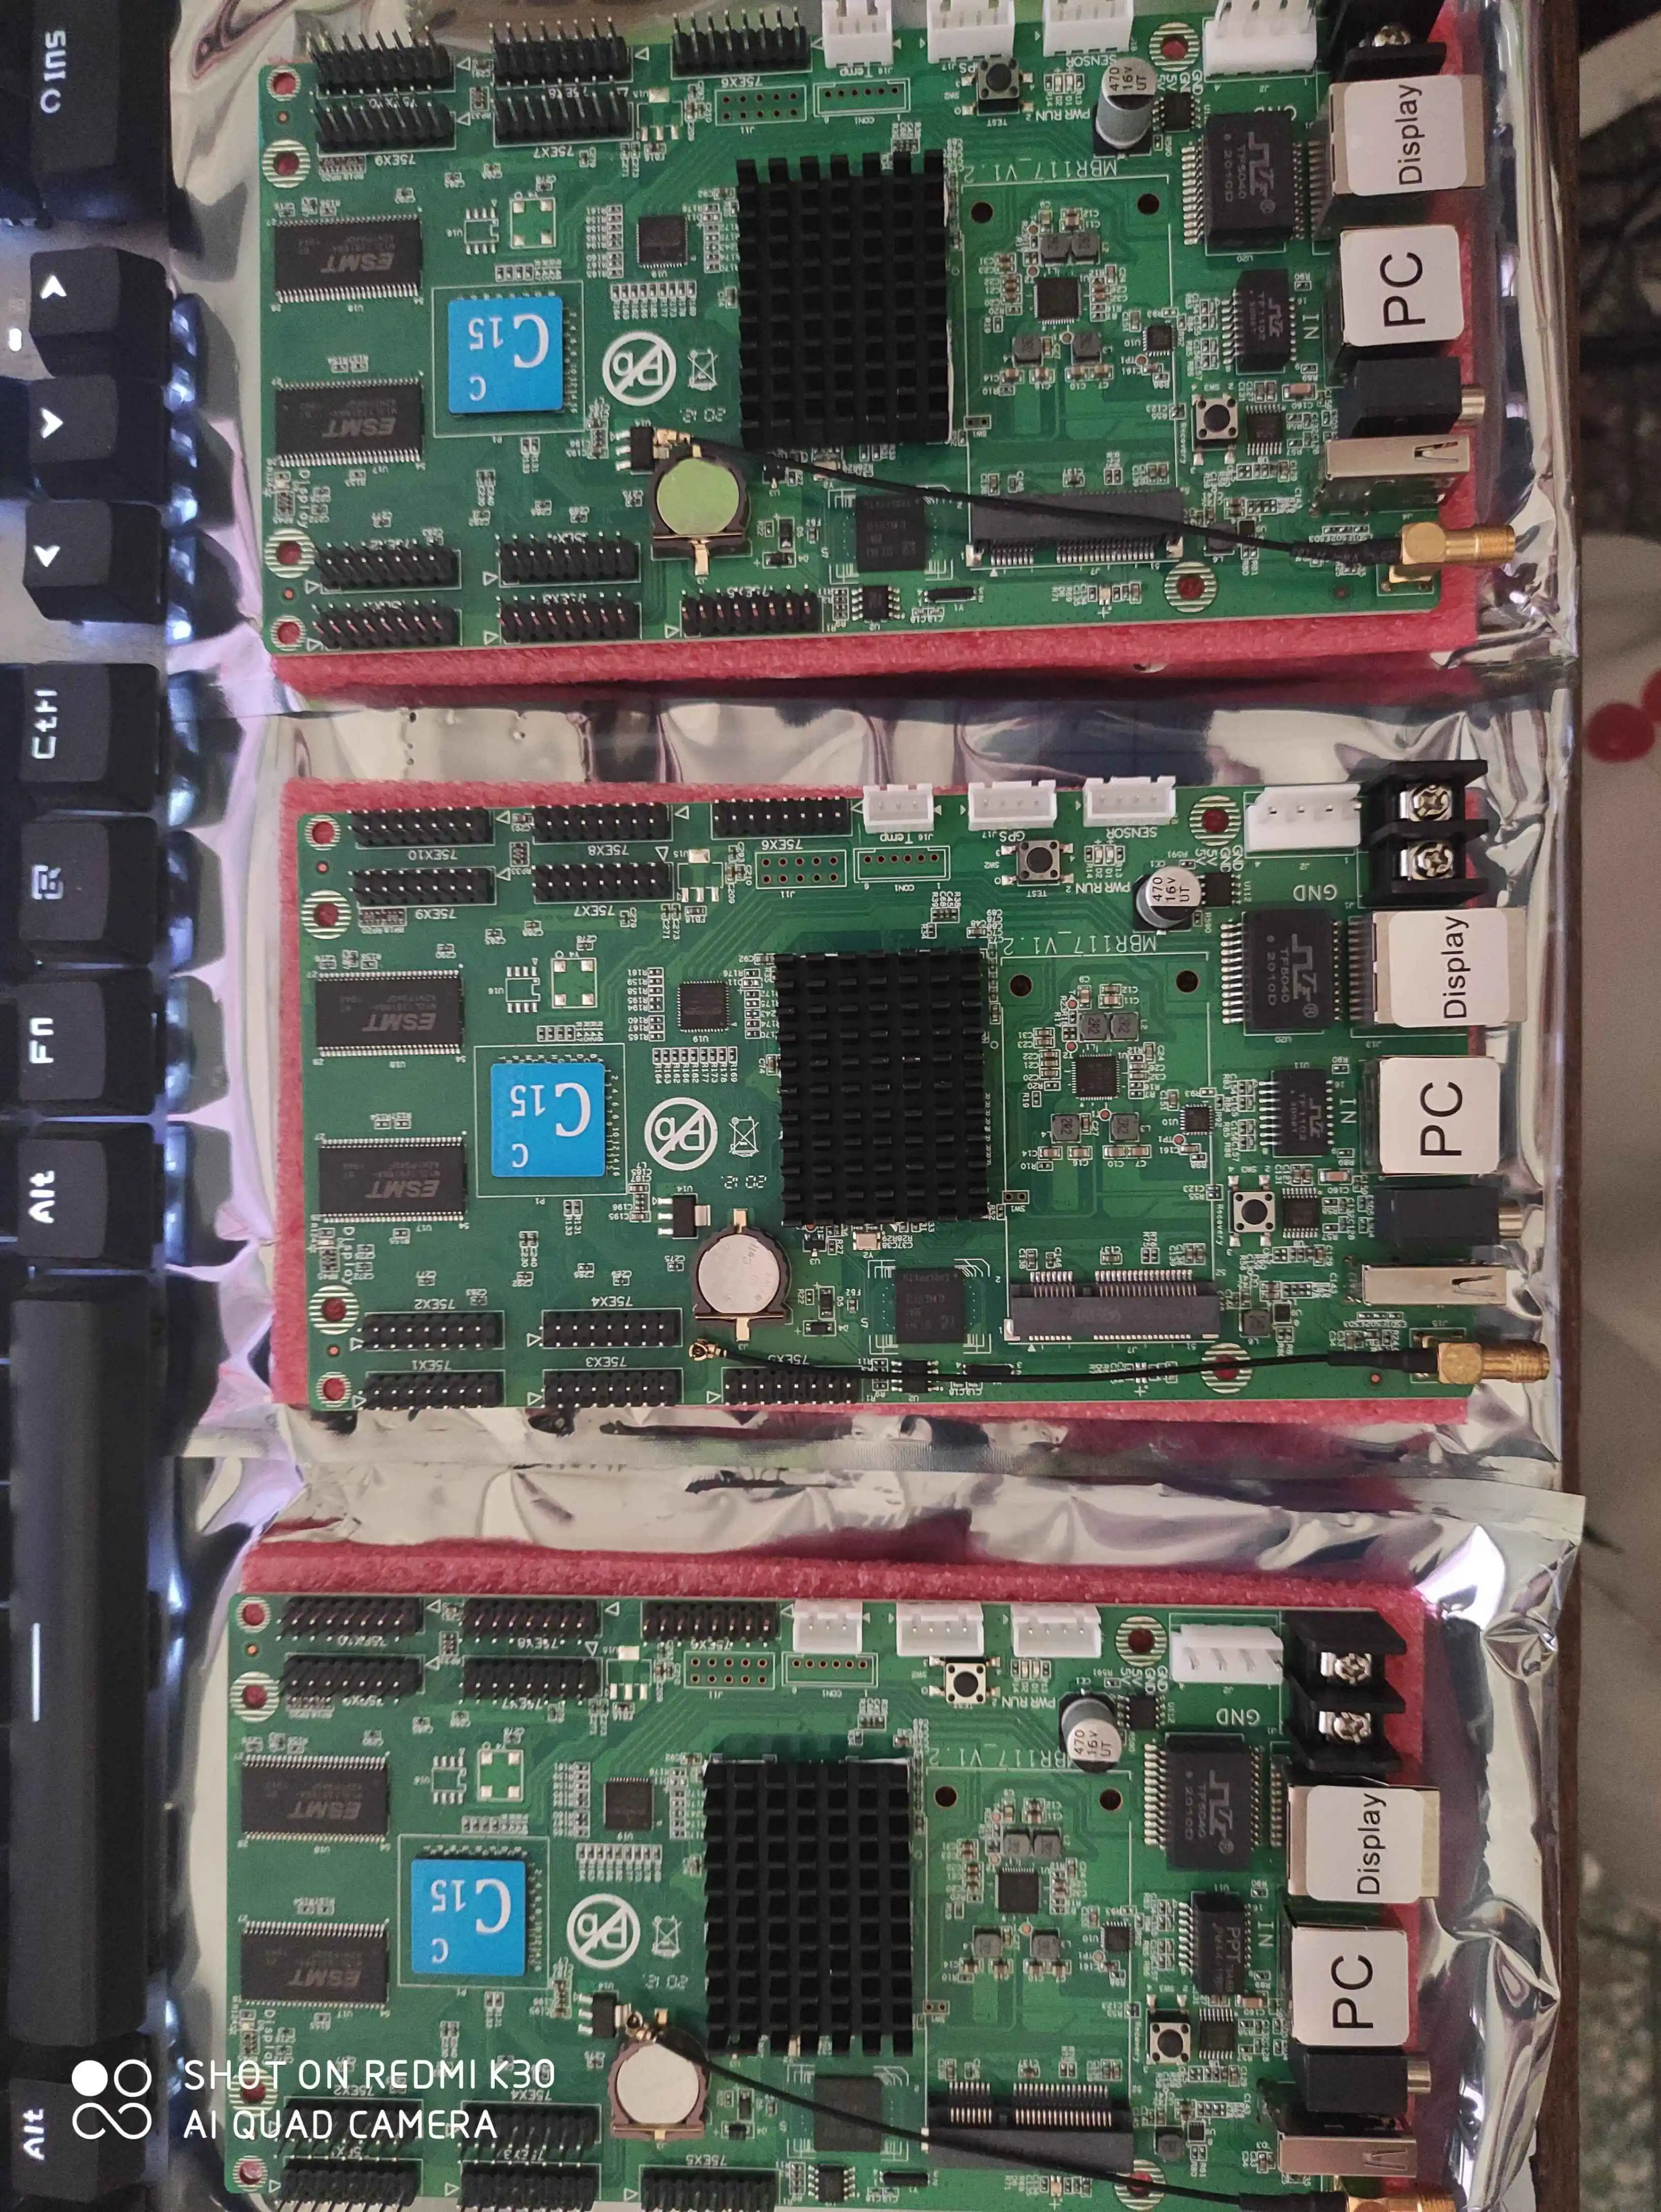 C15C/C15C WIFI (zamenjaj HUIDU C10C)RGB led zaslon krmilnik za kartice 10 skupin HUB75E podpira P2 P2.5 P3 P4 P5 P6 P8 P10